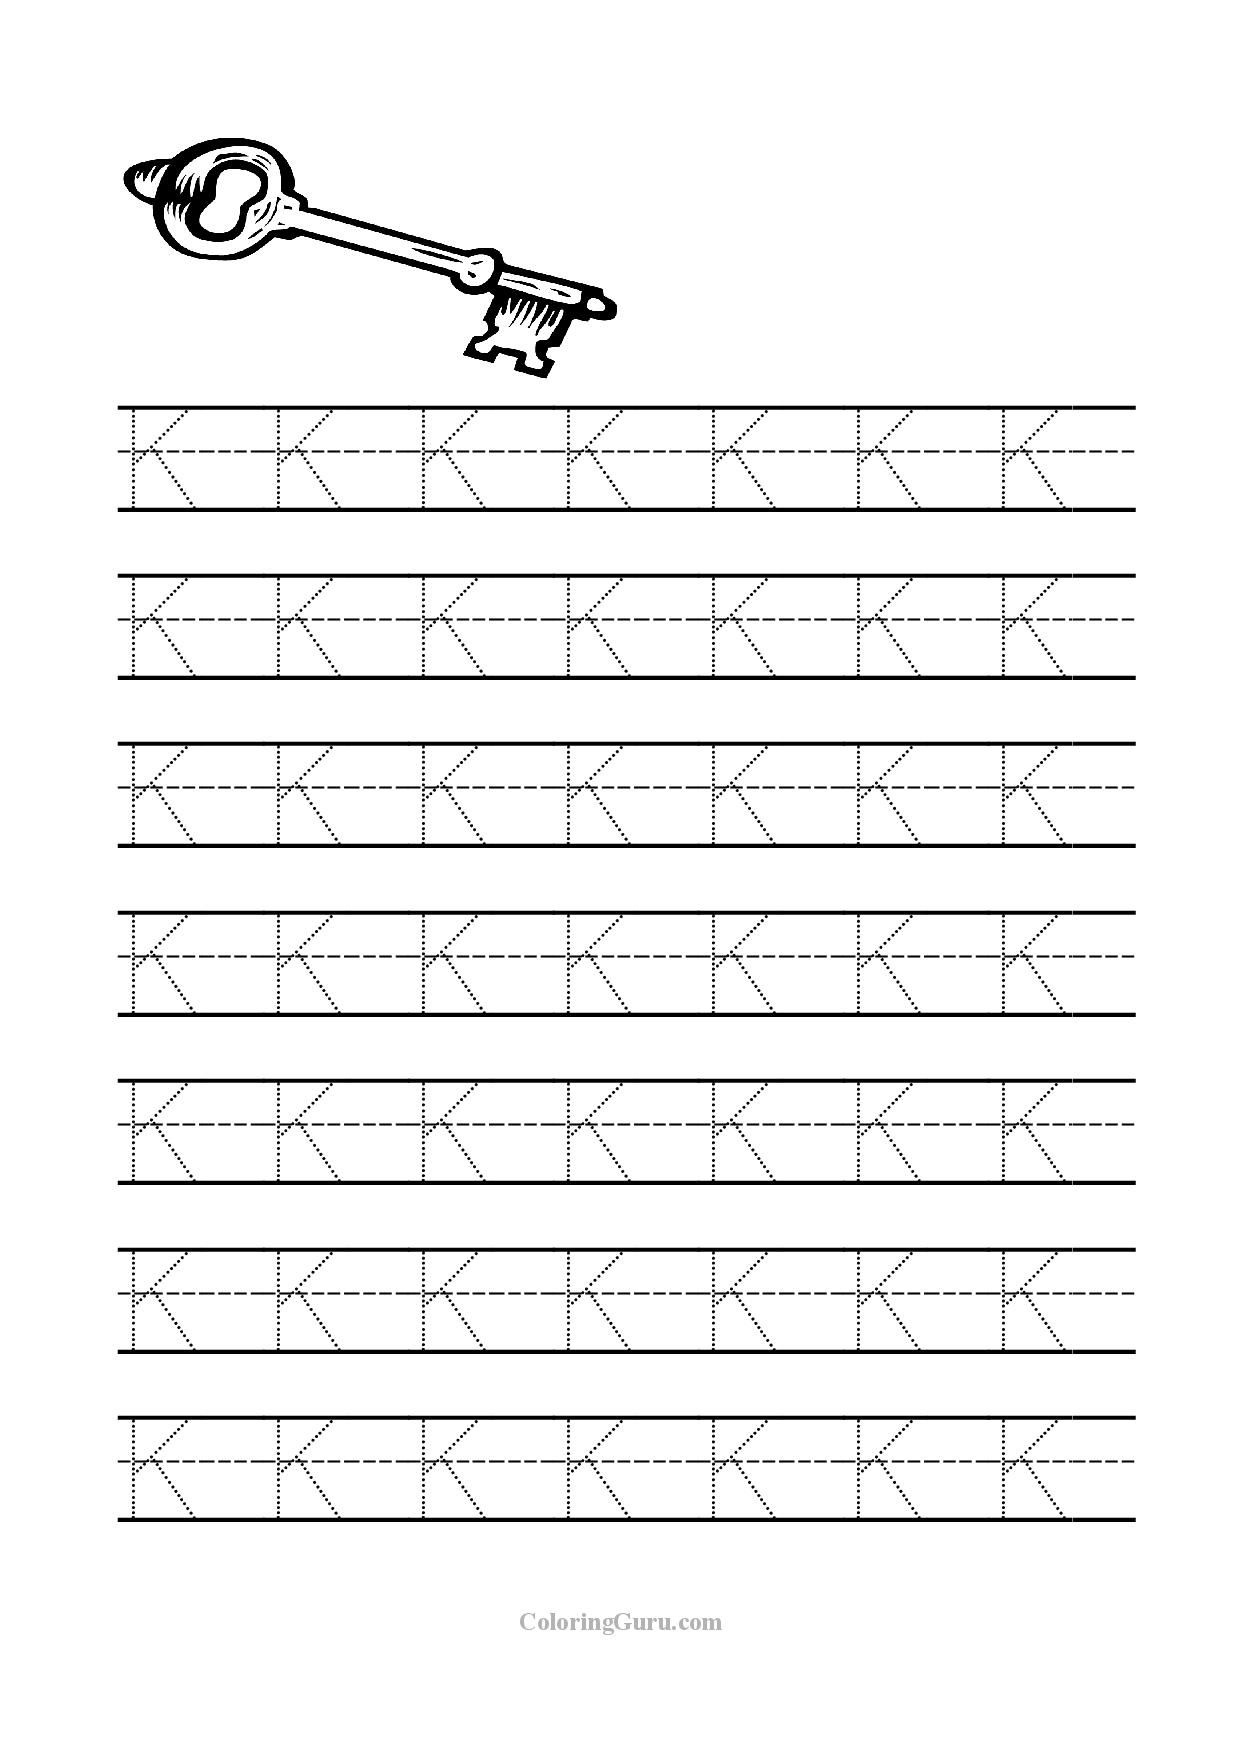 Free Printable Tracing Letter K Worksheets For Preschool | Kids - Free Printable Letter K Worksheets